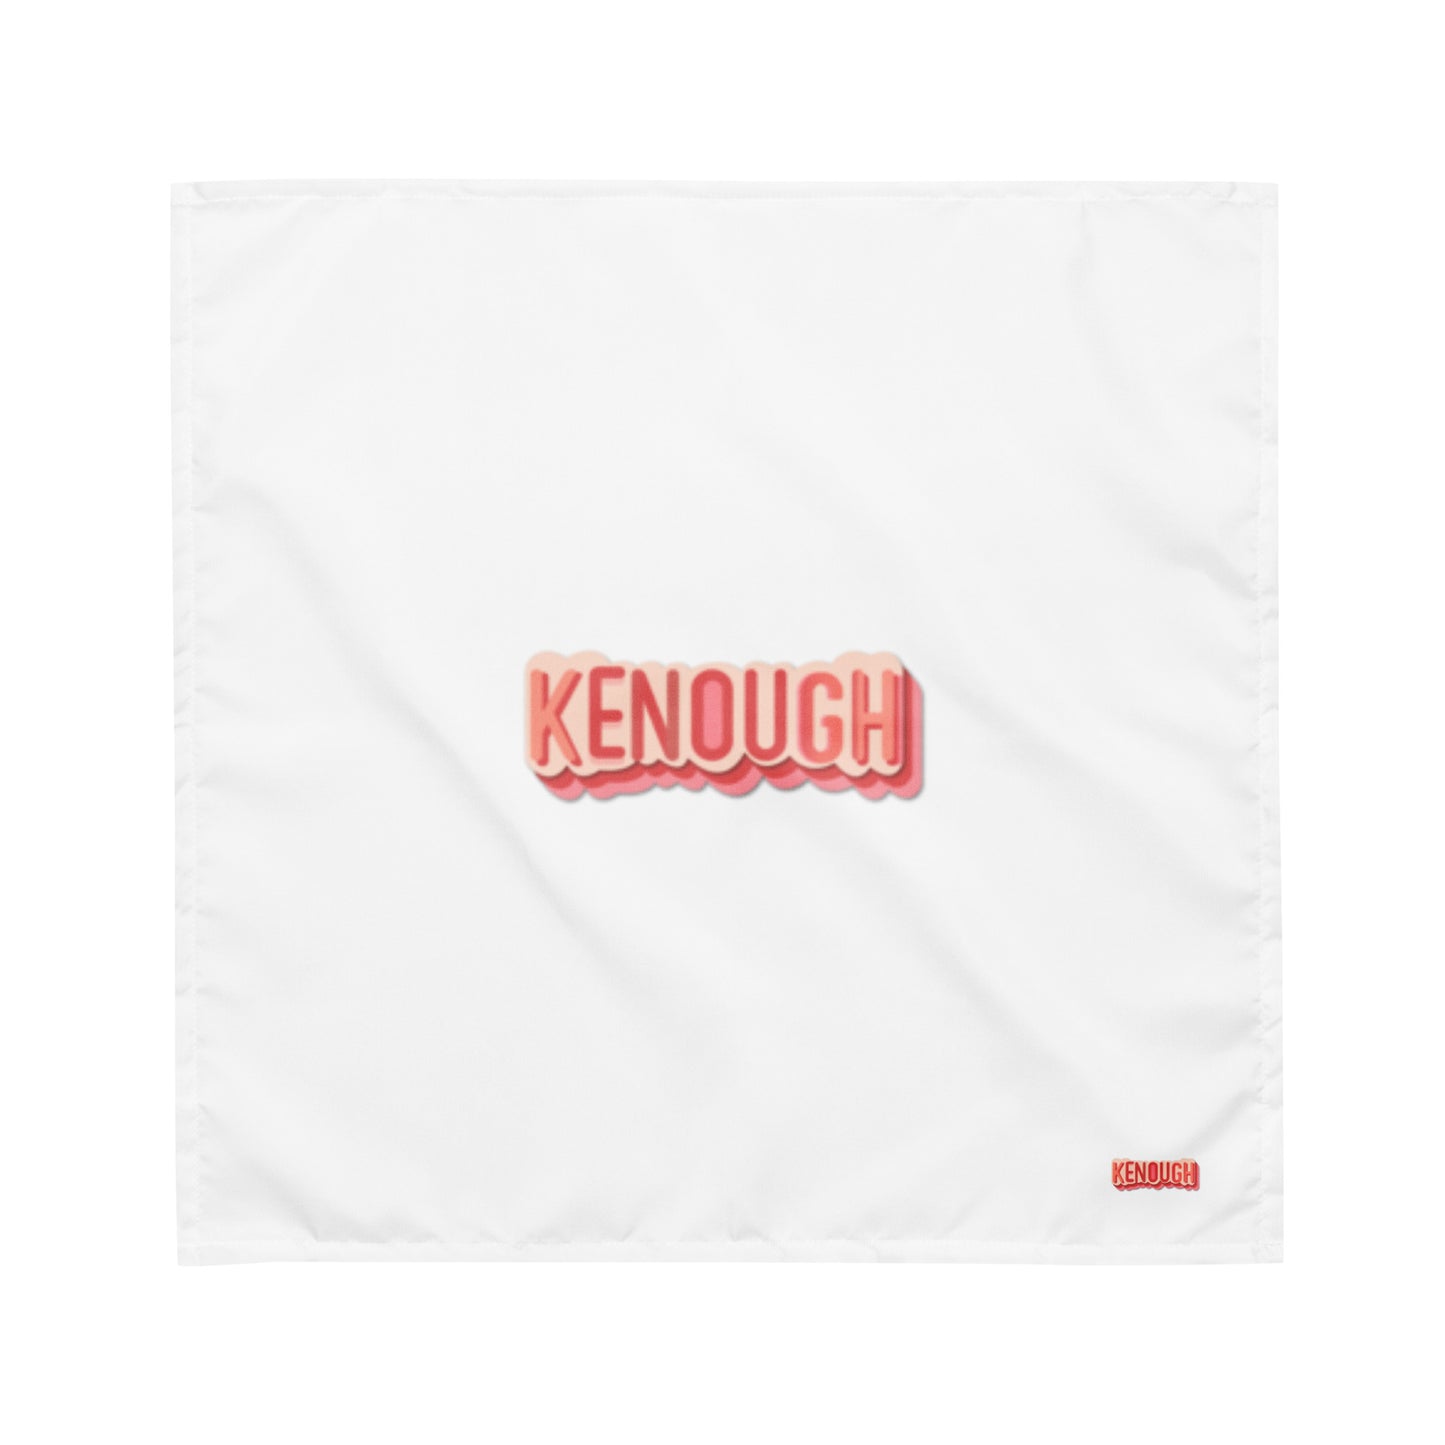 Kenough All-over print bandana